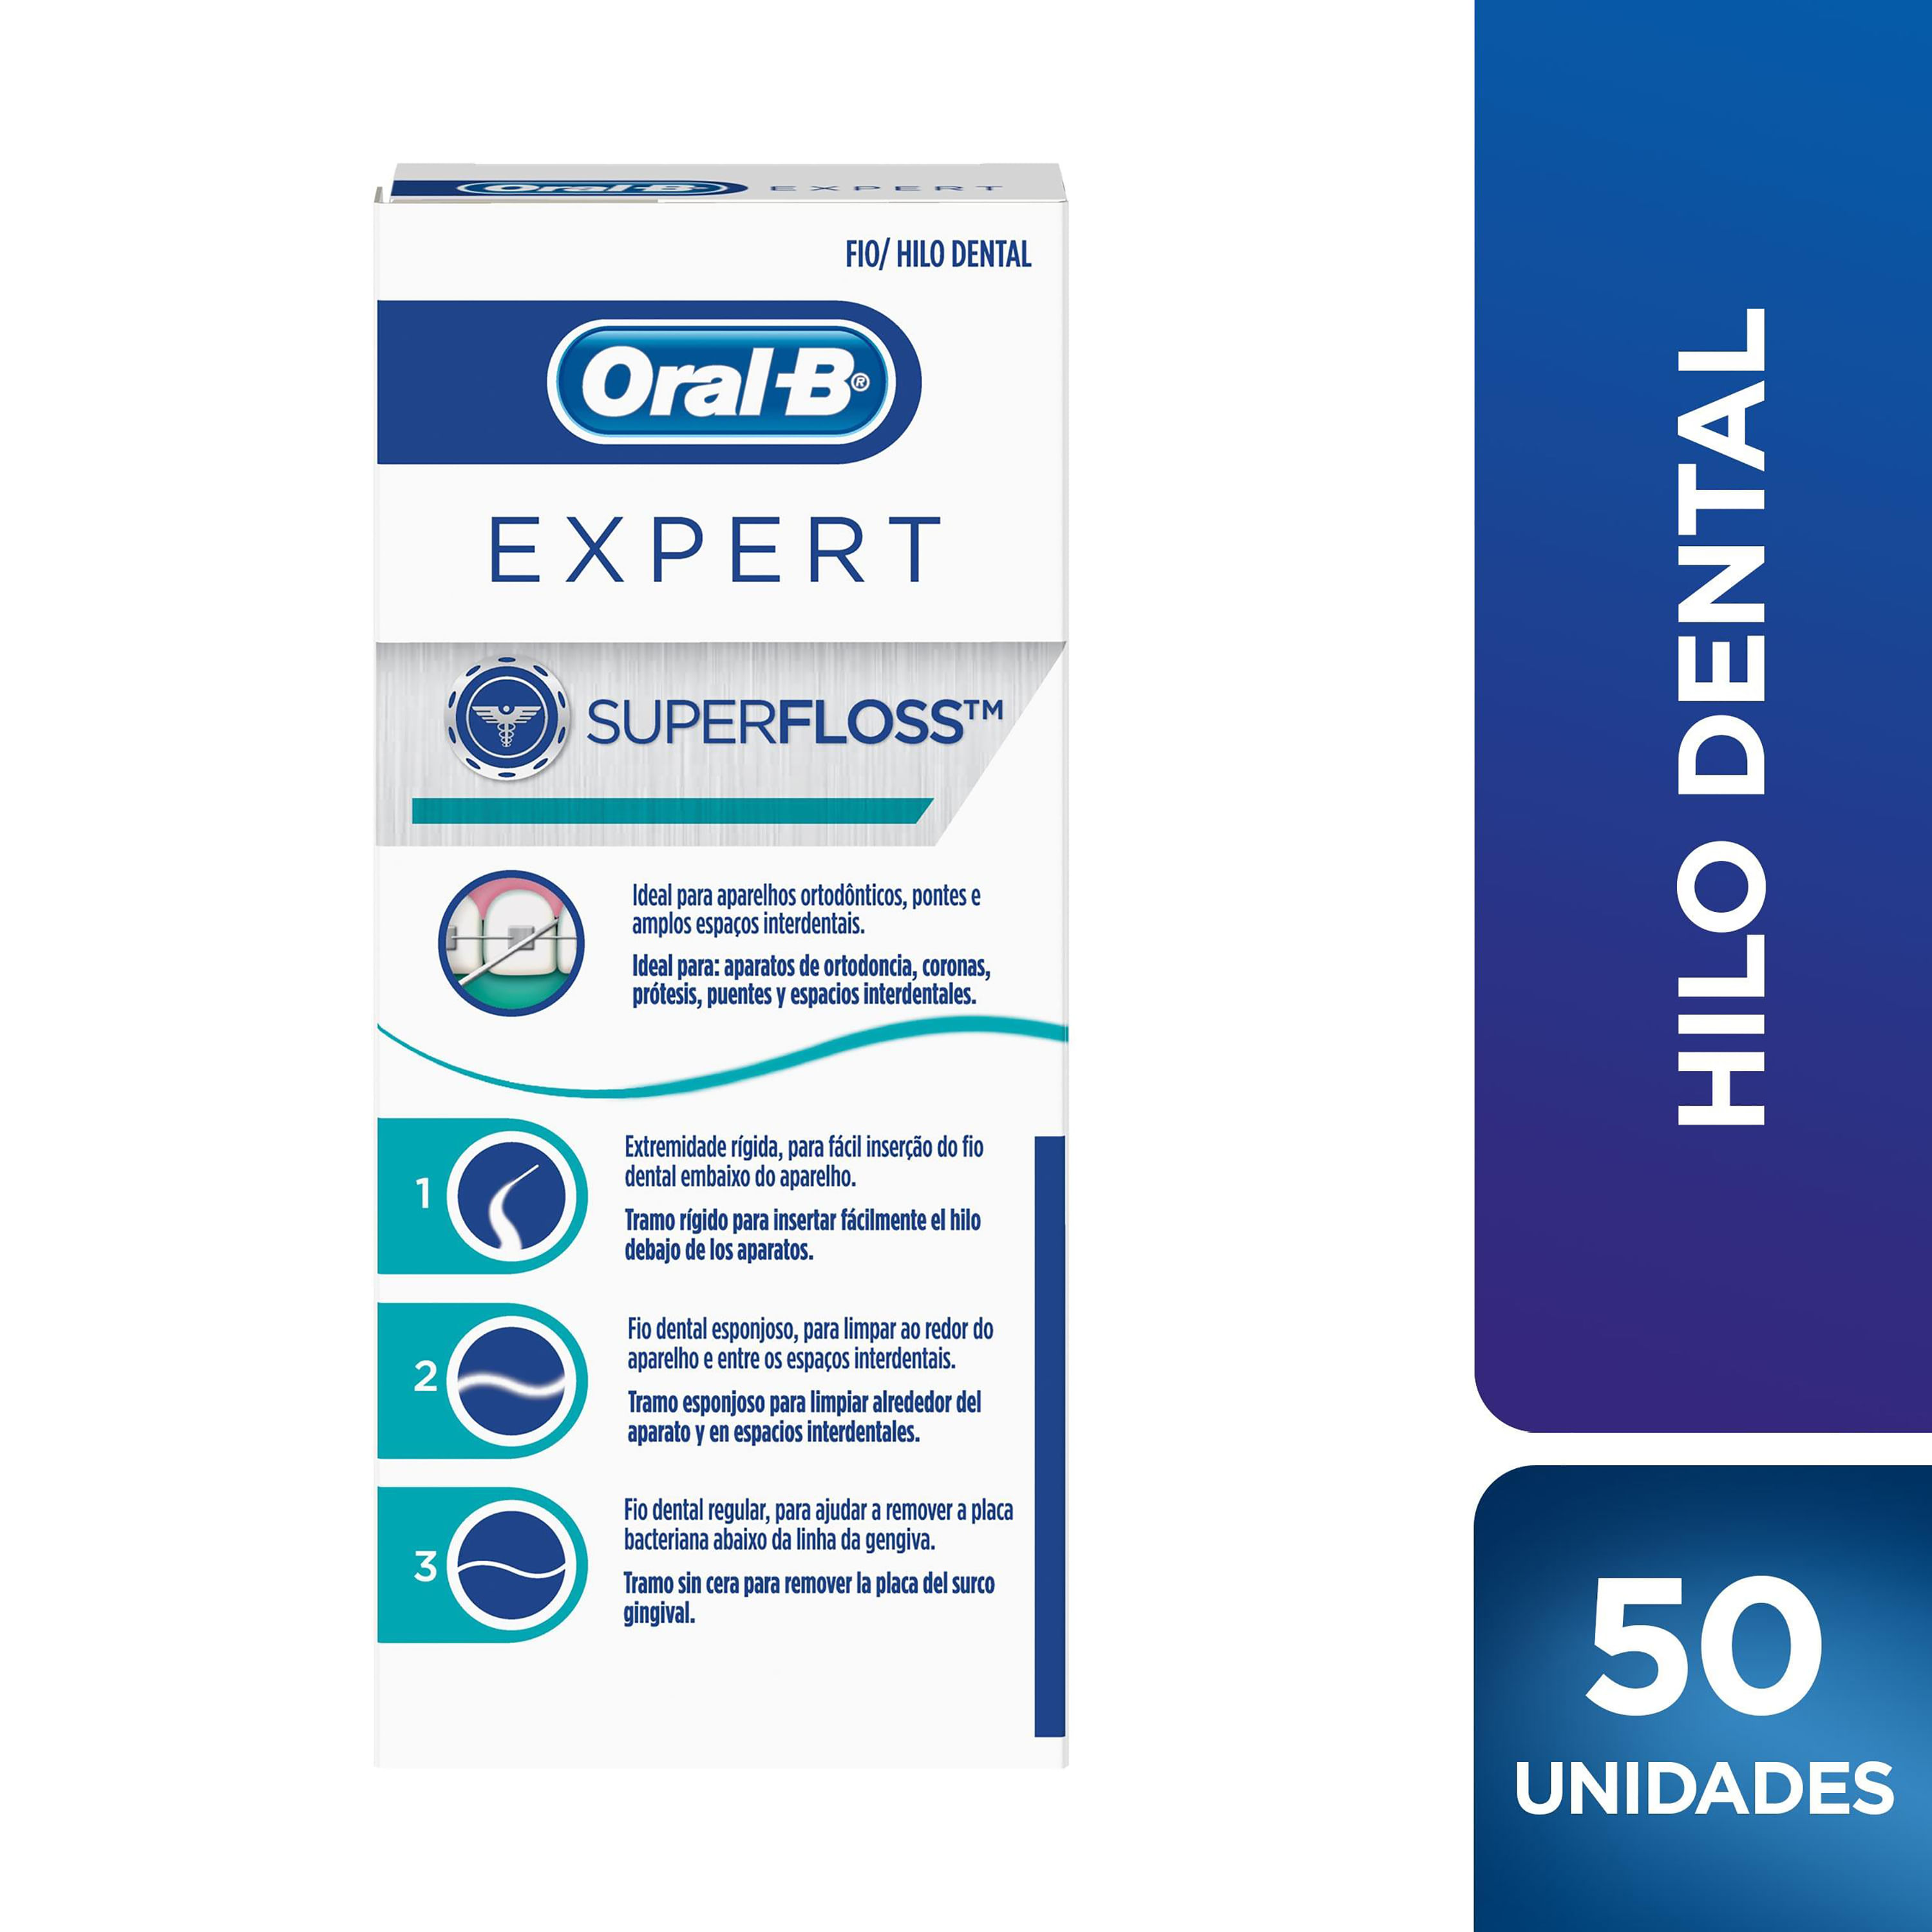 Oral-b Superfloss Seda Dental Menta 50 Unidades